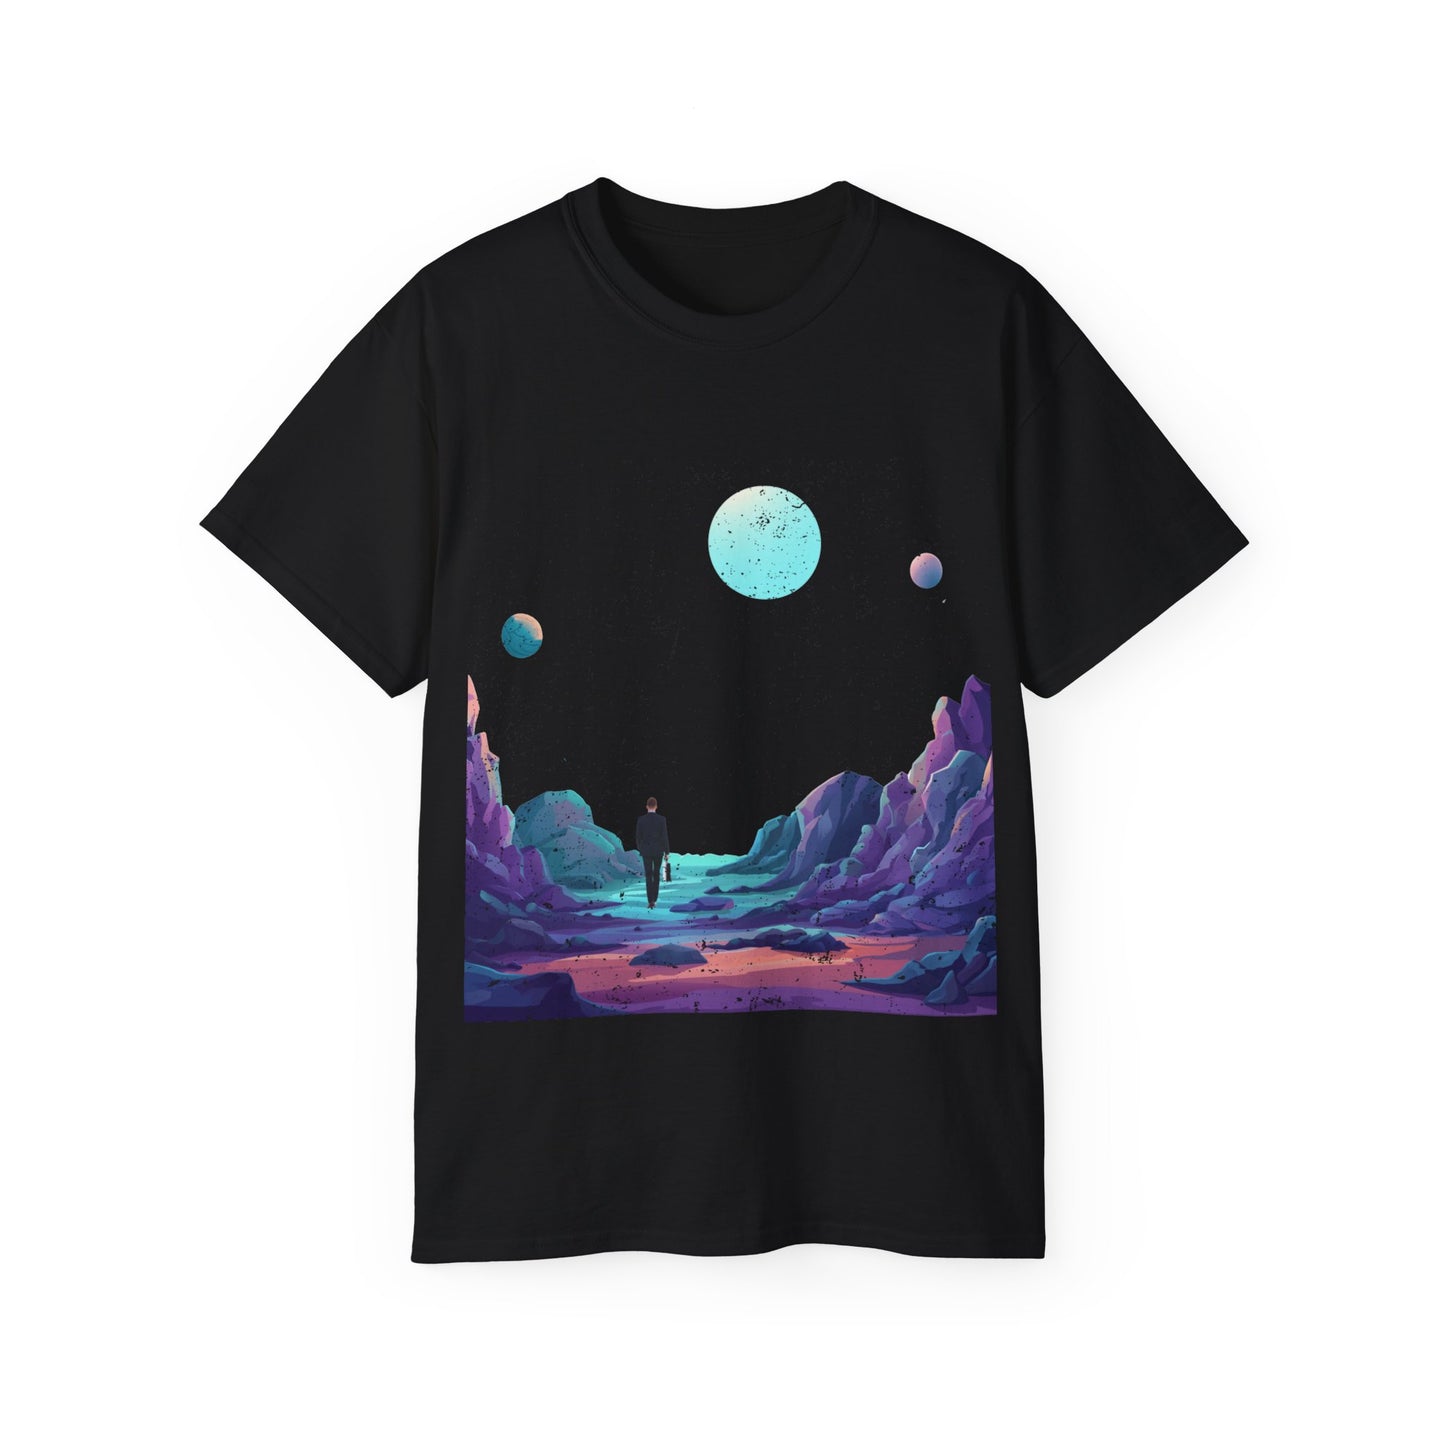 Space walk T-shirt